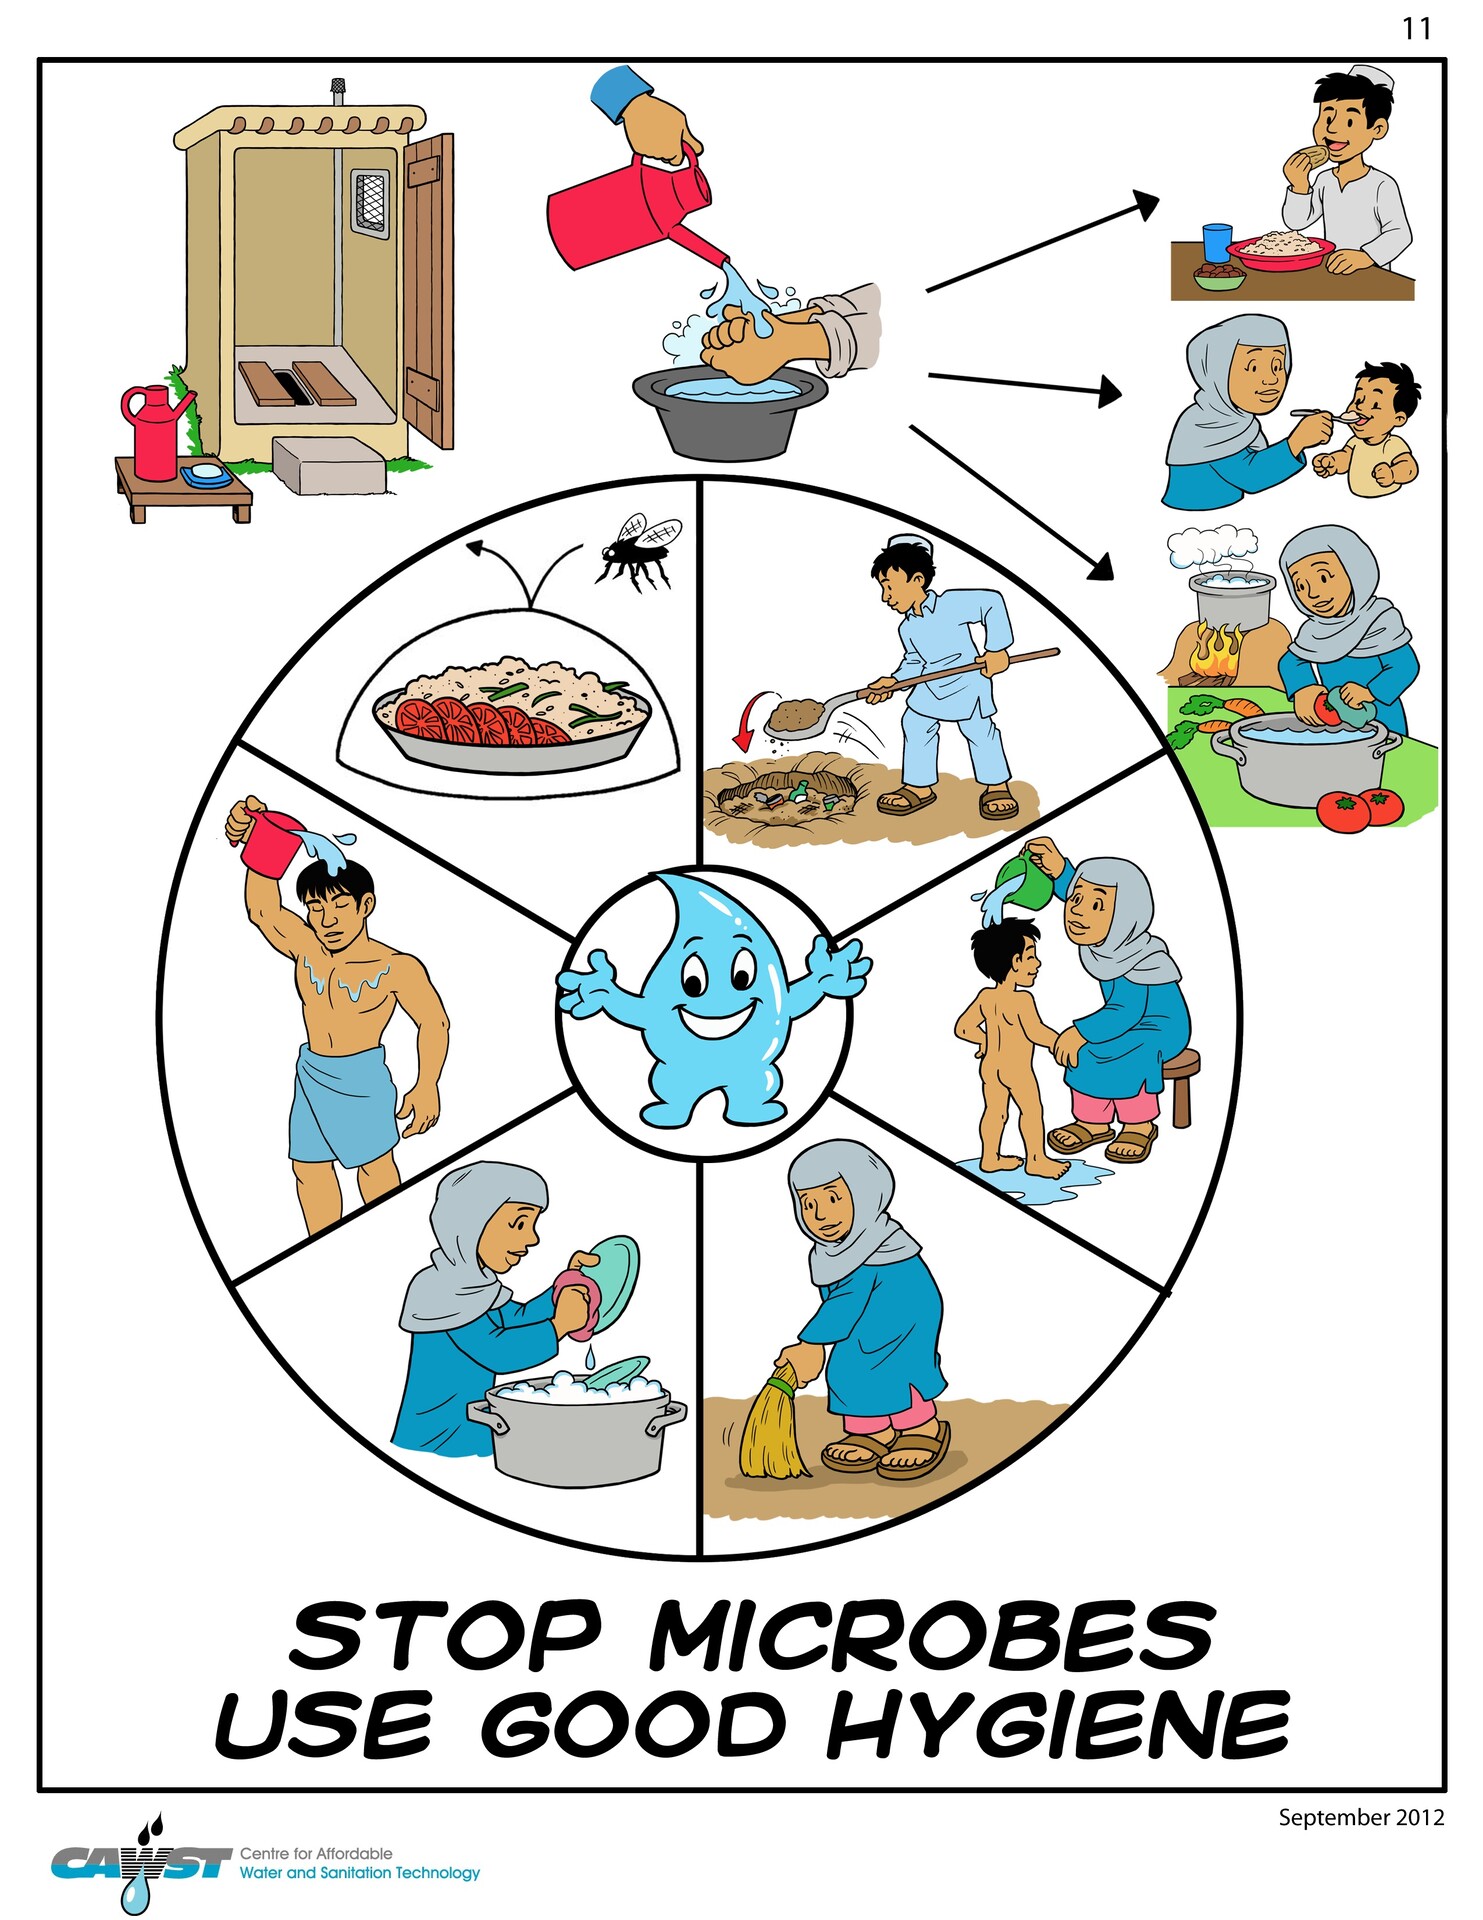 Five Basic Cholera Prevention Steps, Cholera